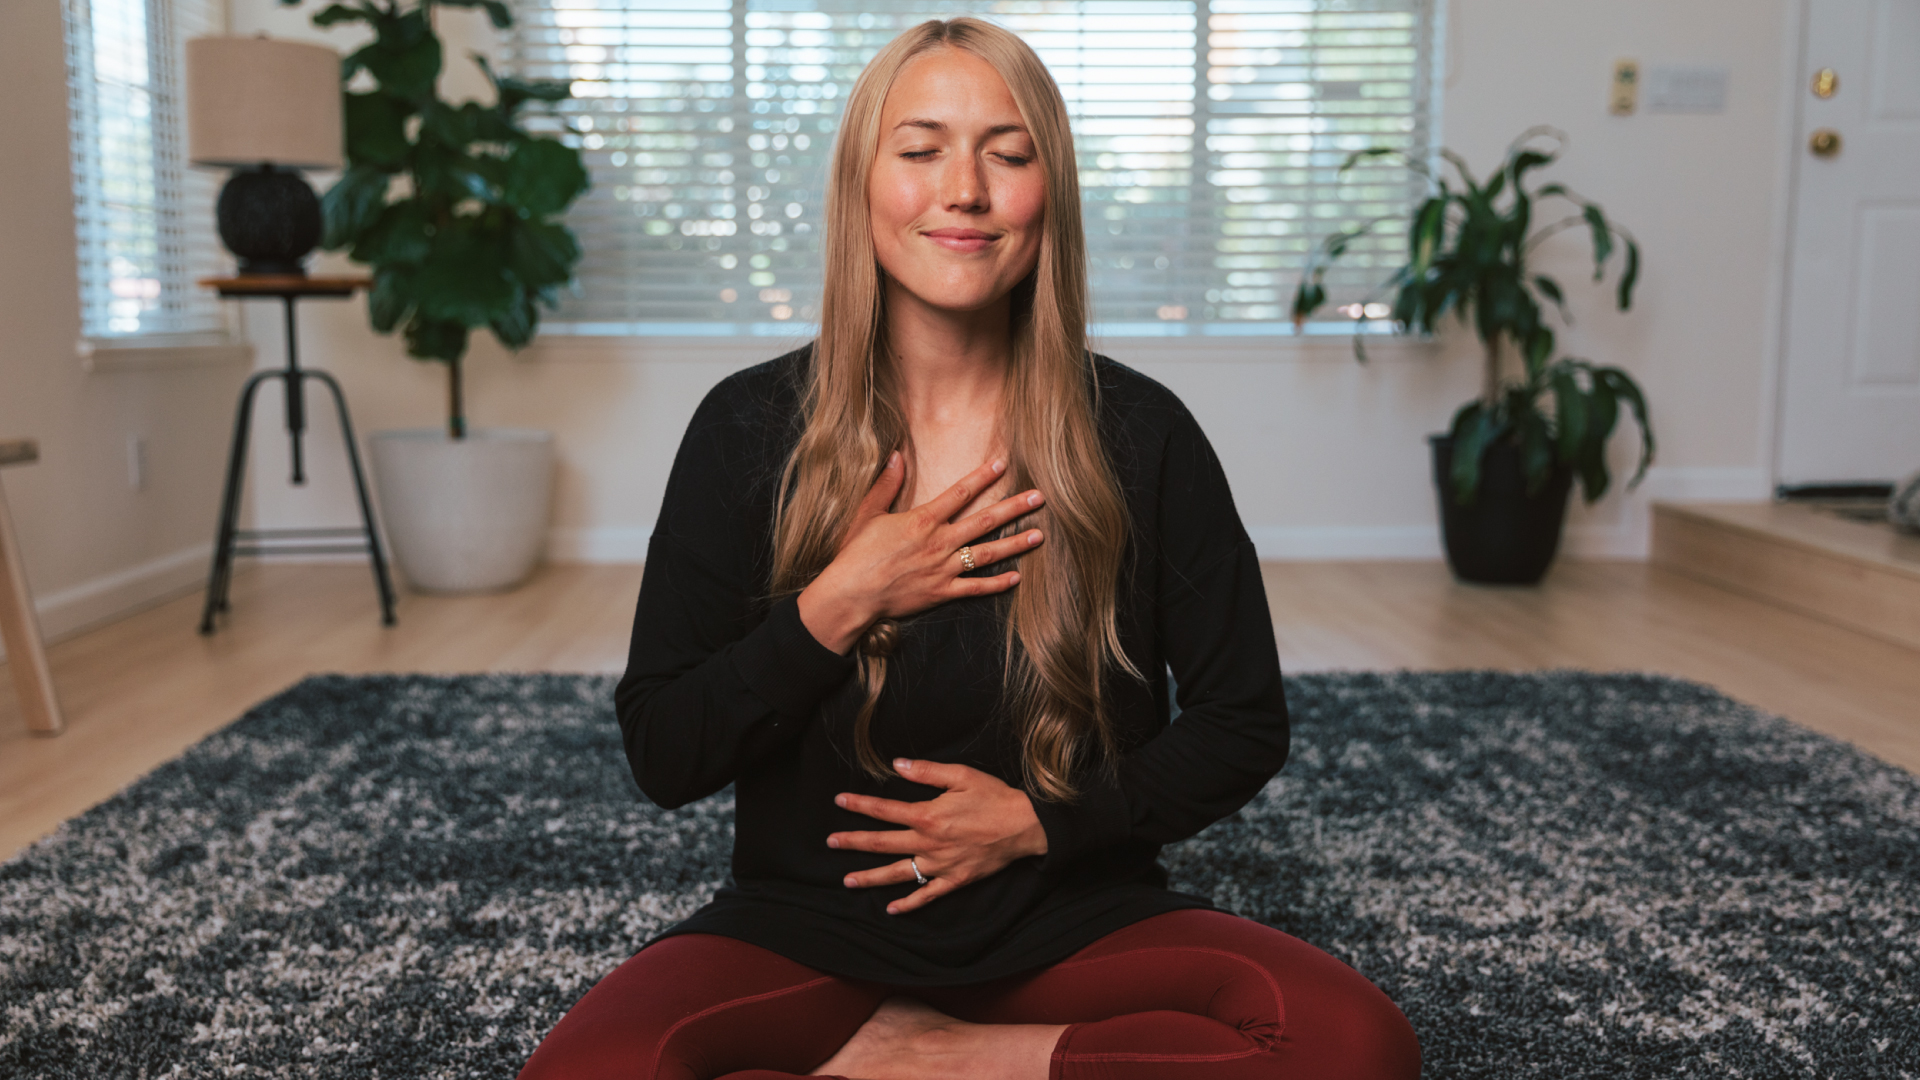 hypnobirth meditation hypnobirthing affirmations class course pregnancy labor birth natural